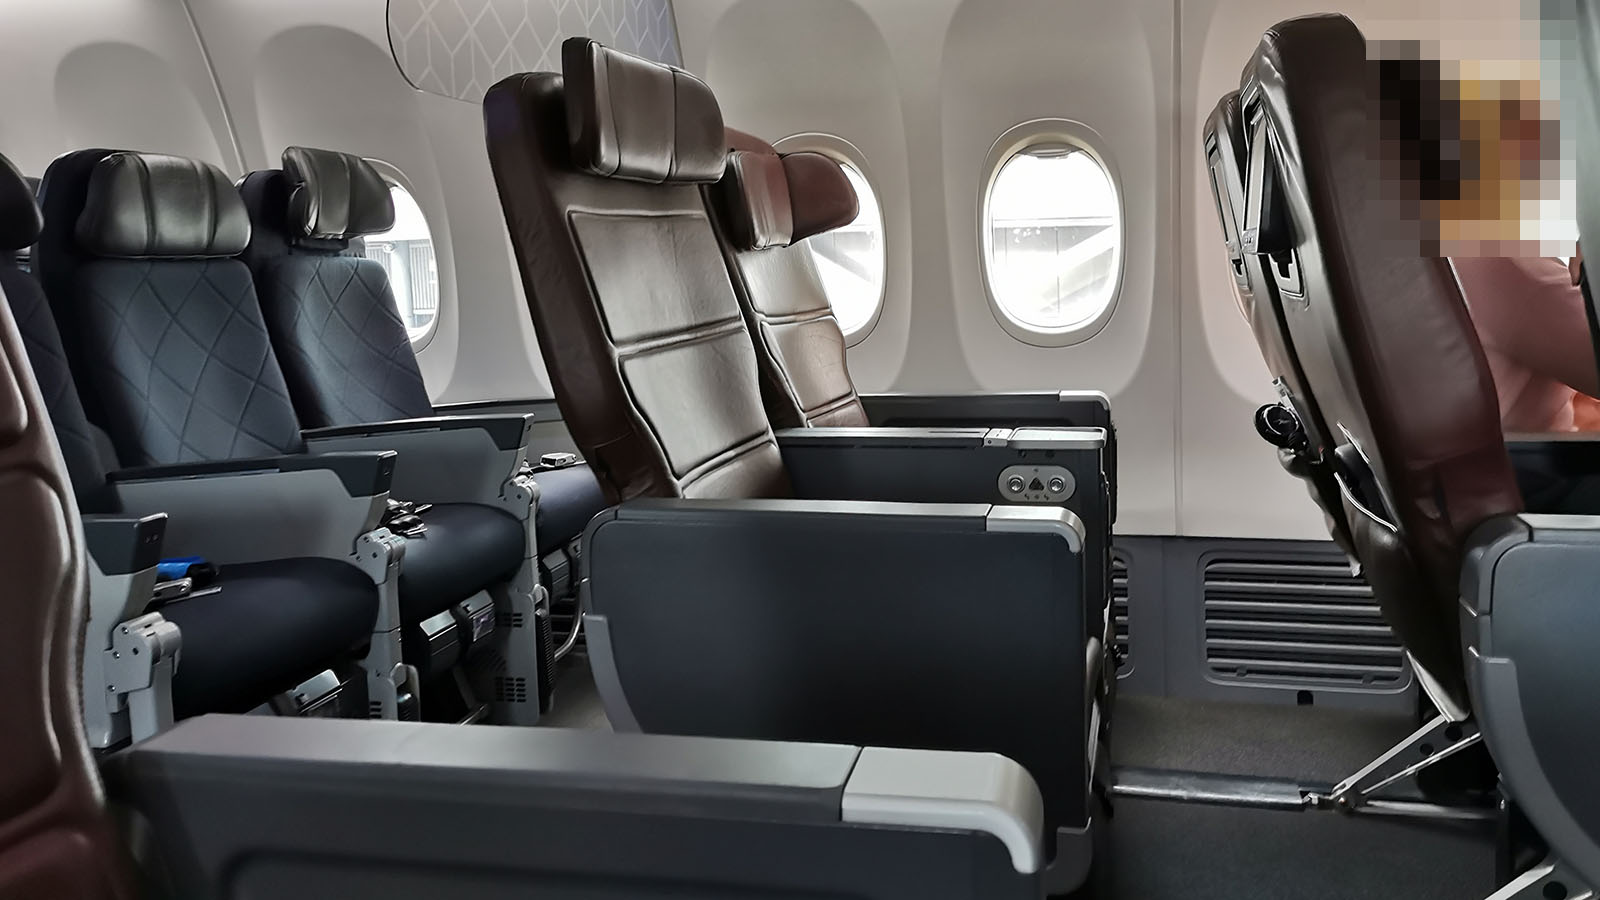 Qantas Boeing 737 Business seating